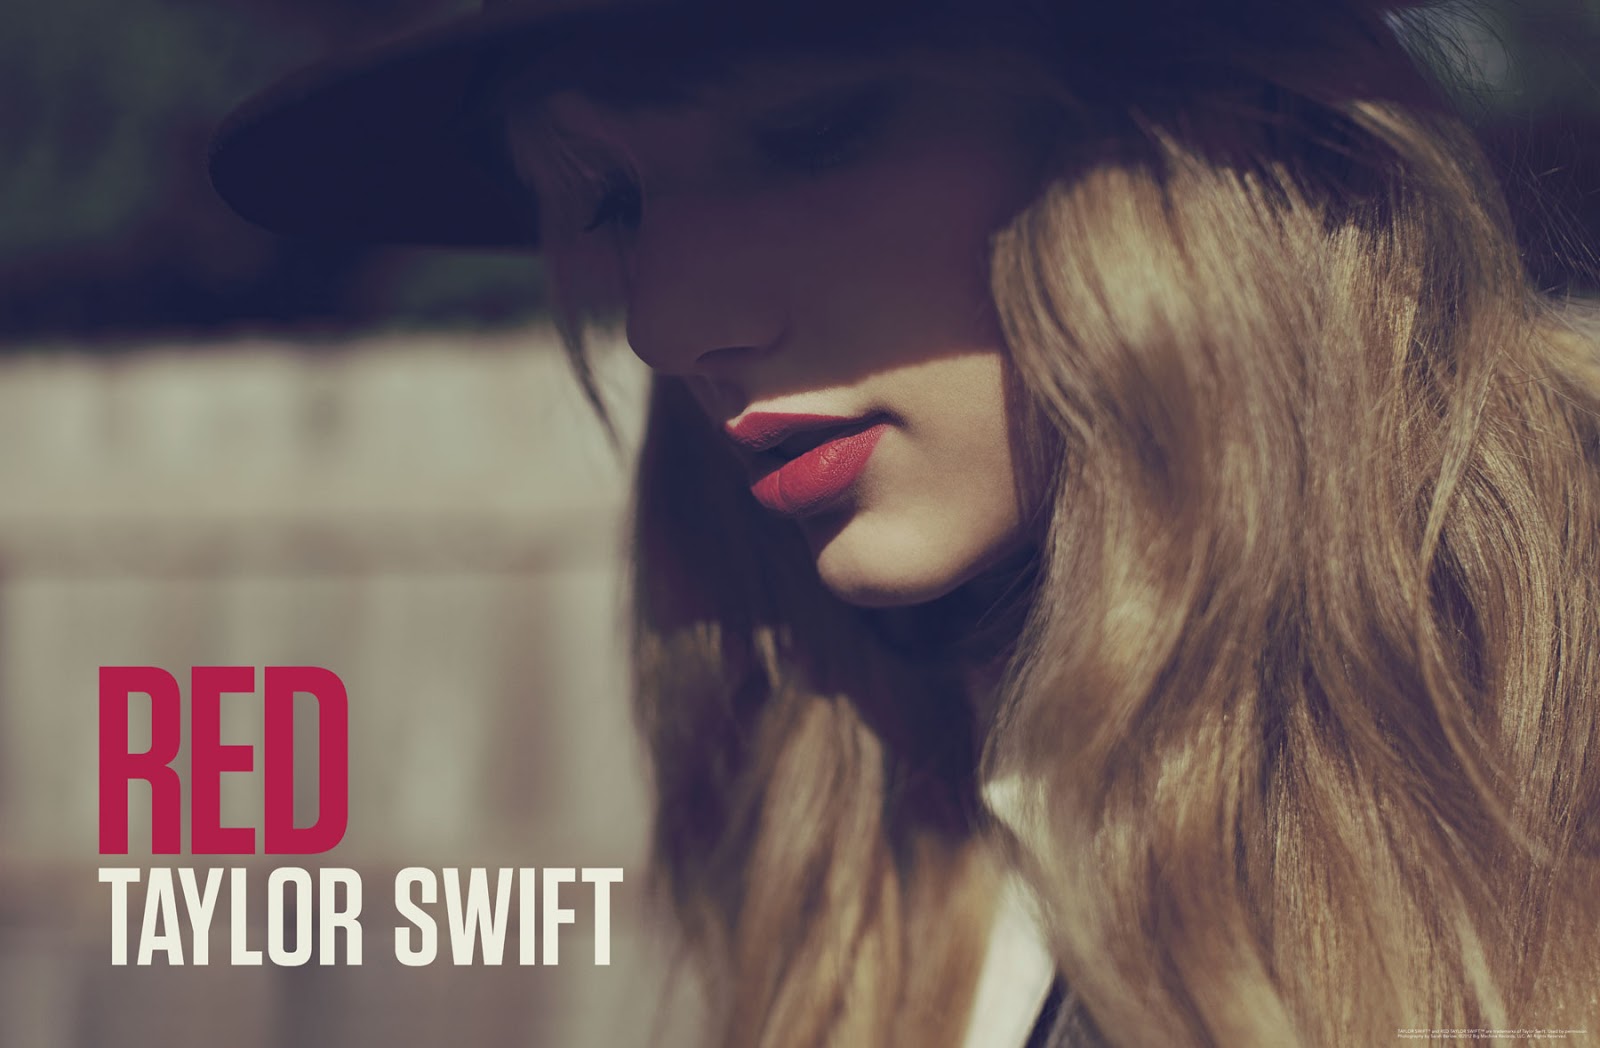 Recensione Album "Red" di Taylor Swift Booklet Music